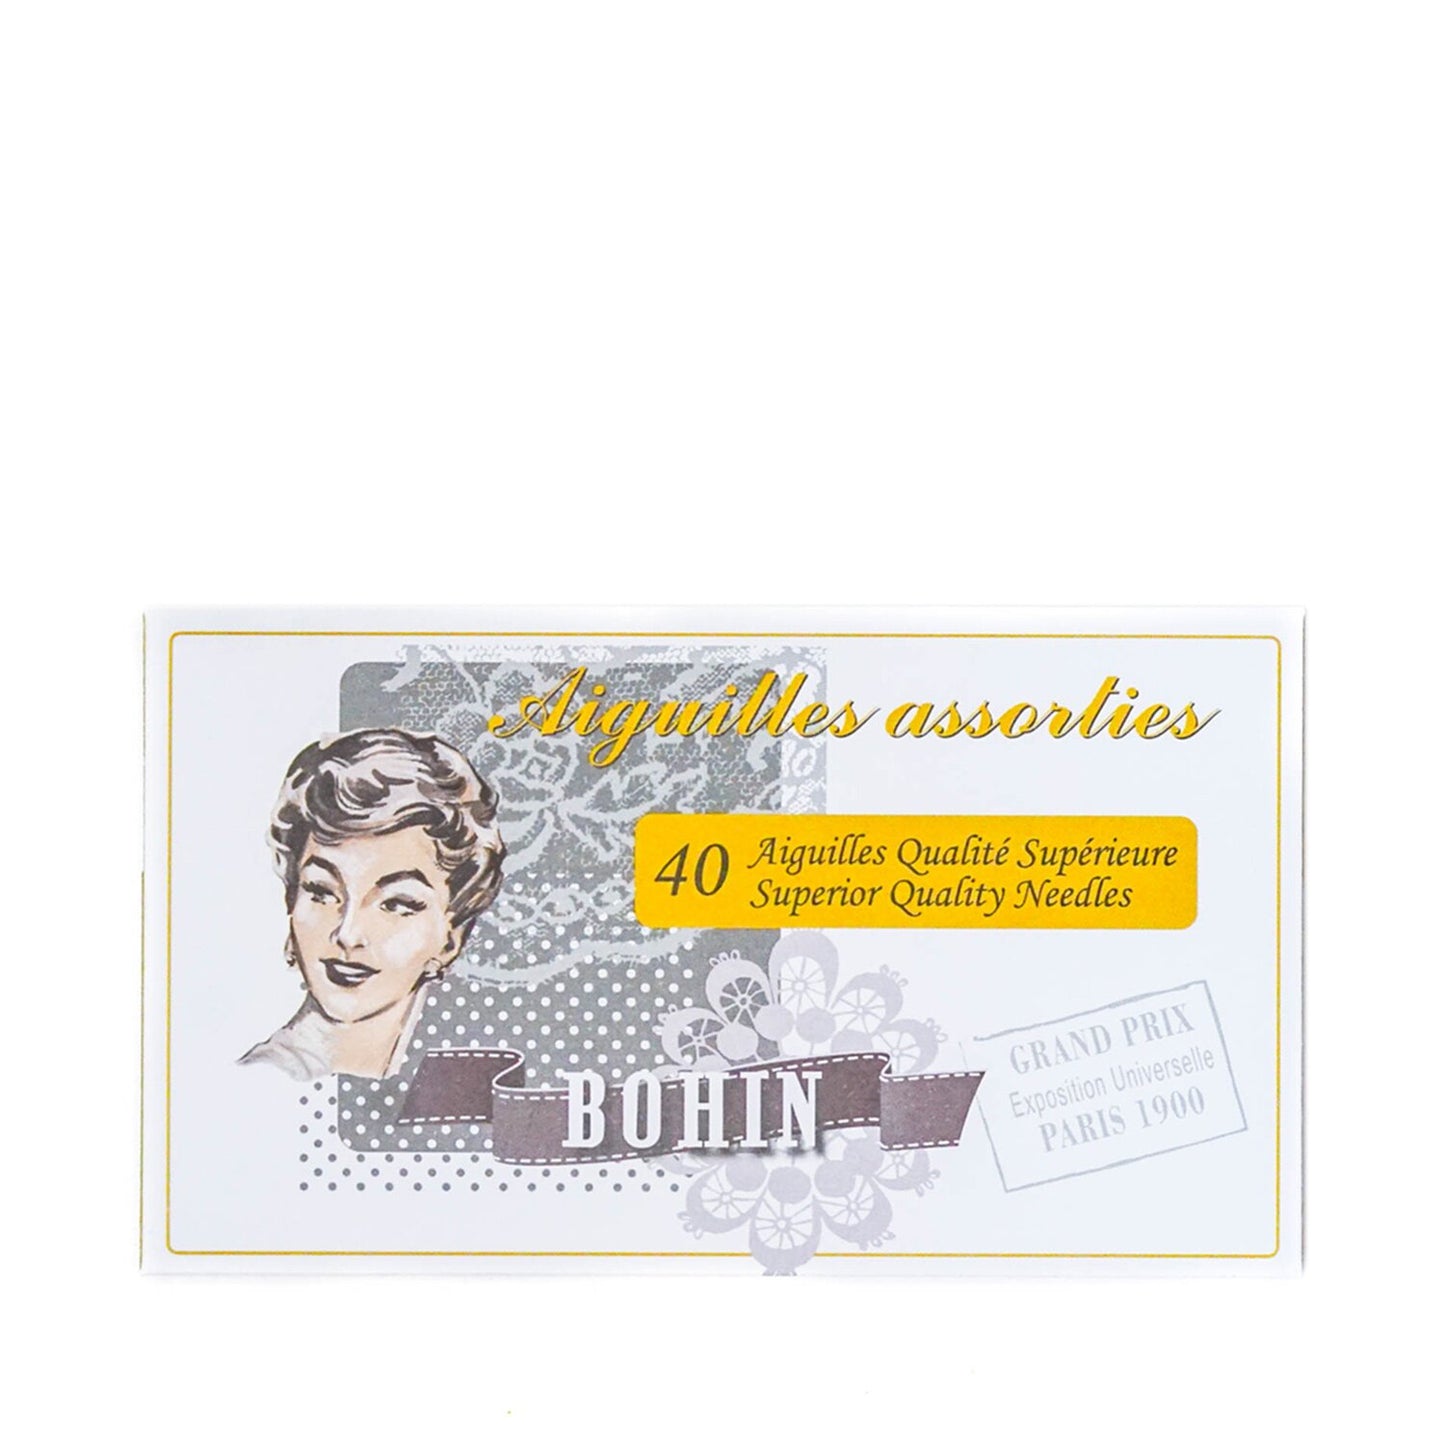 Bohin Vintage Needle Assortment - White Package